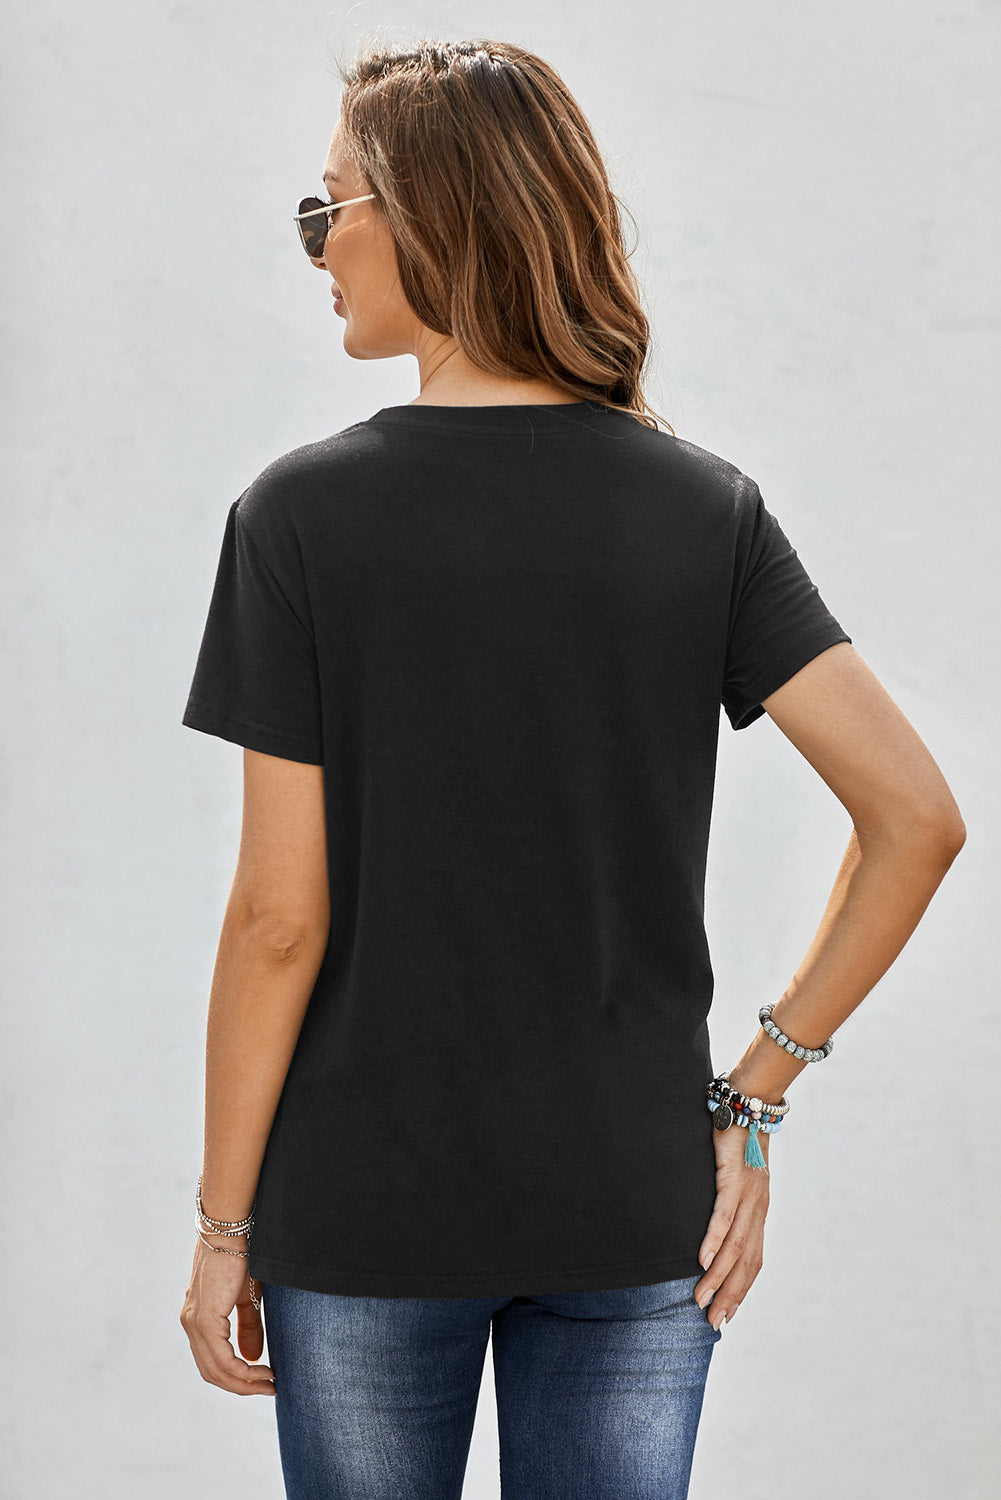 Women's Black Crew Neck Dandelion Print Short Sleeve T-shirt